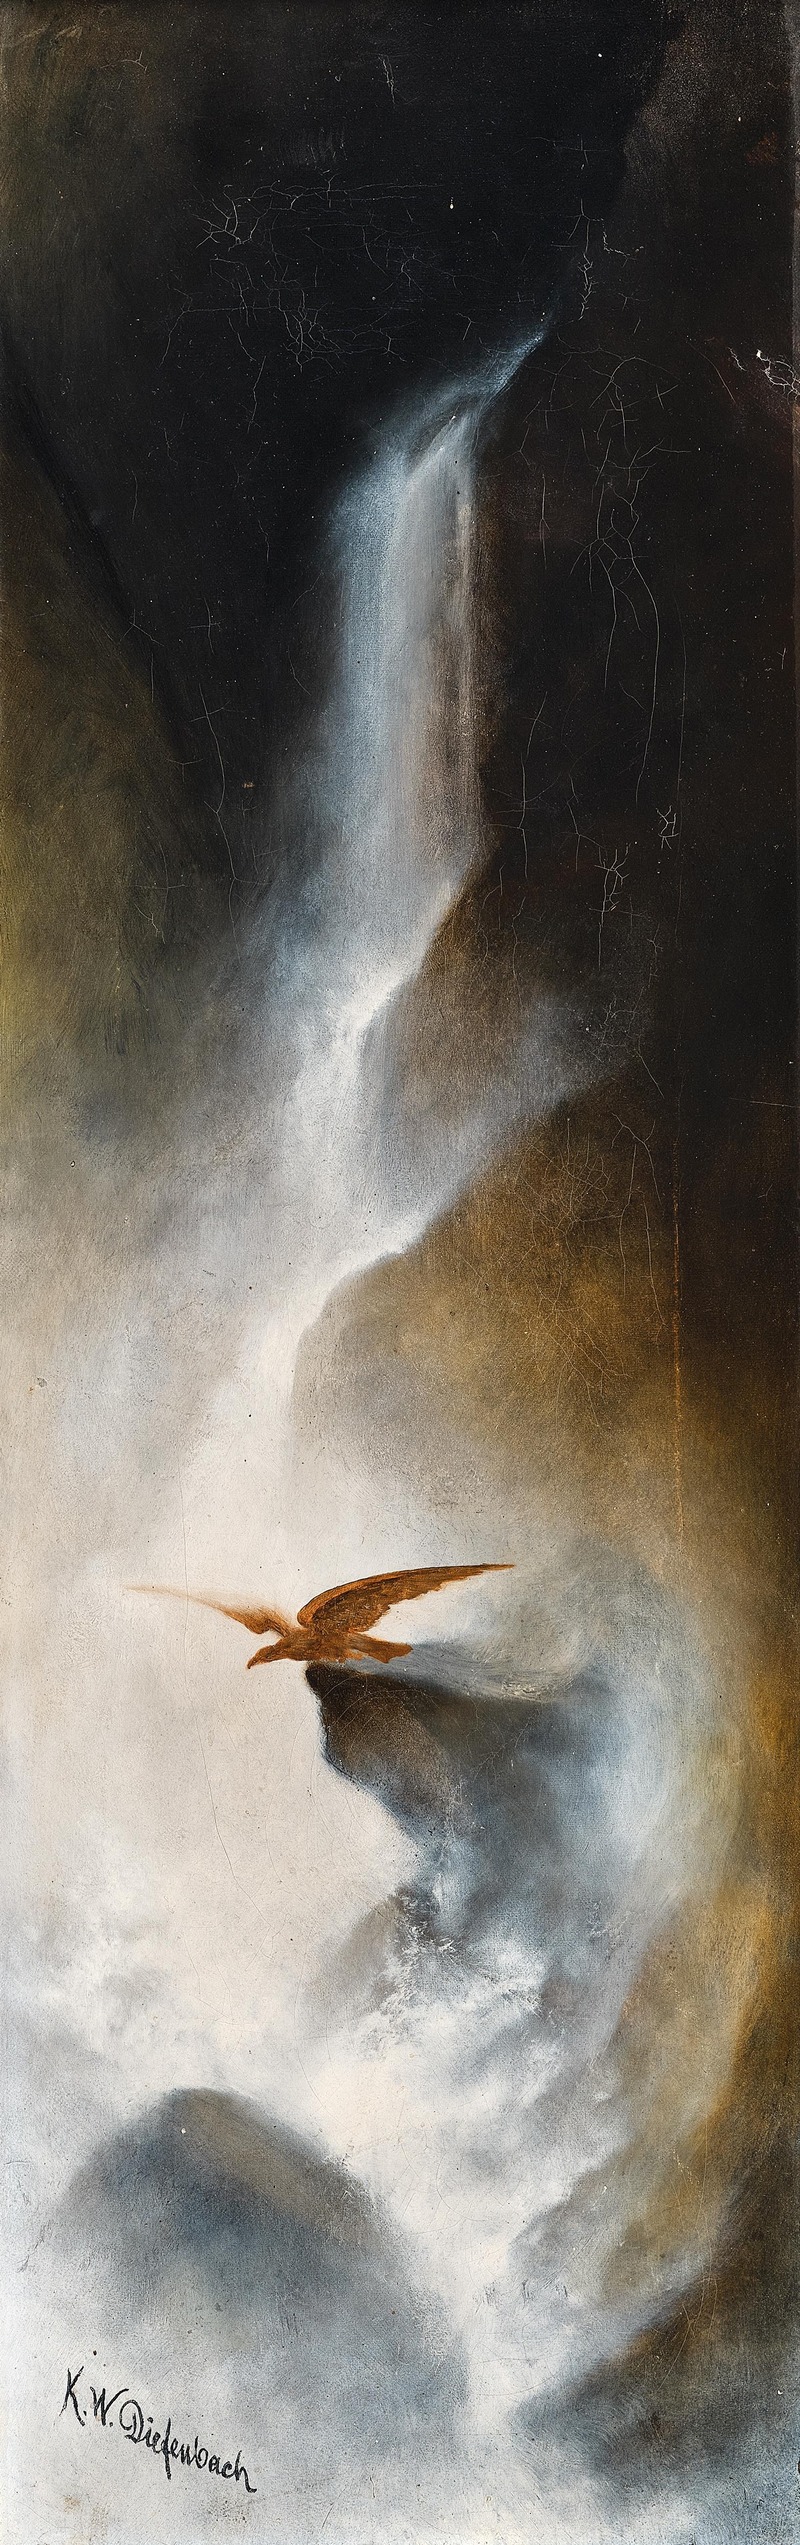 Karl Wilhelm Diefenbach - An eagle before a waterfall